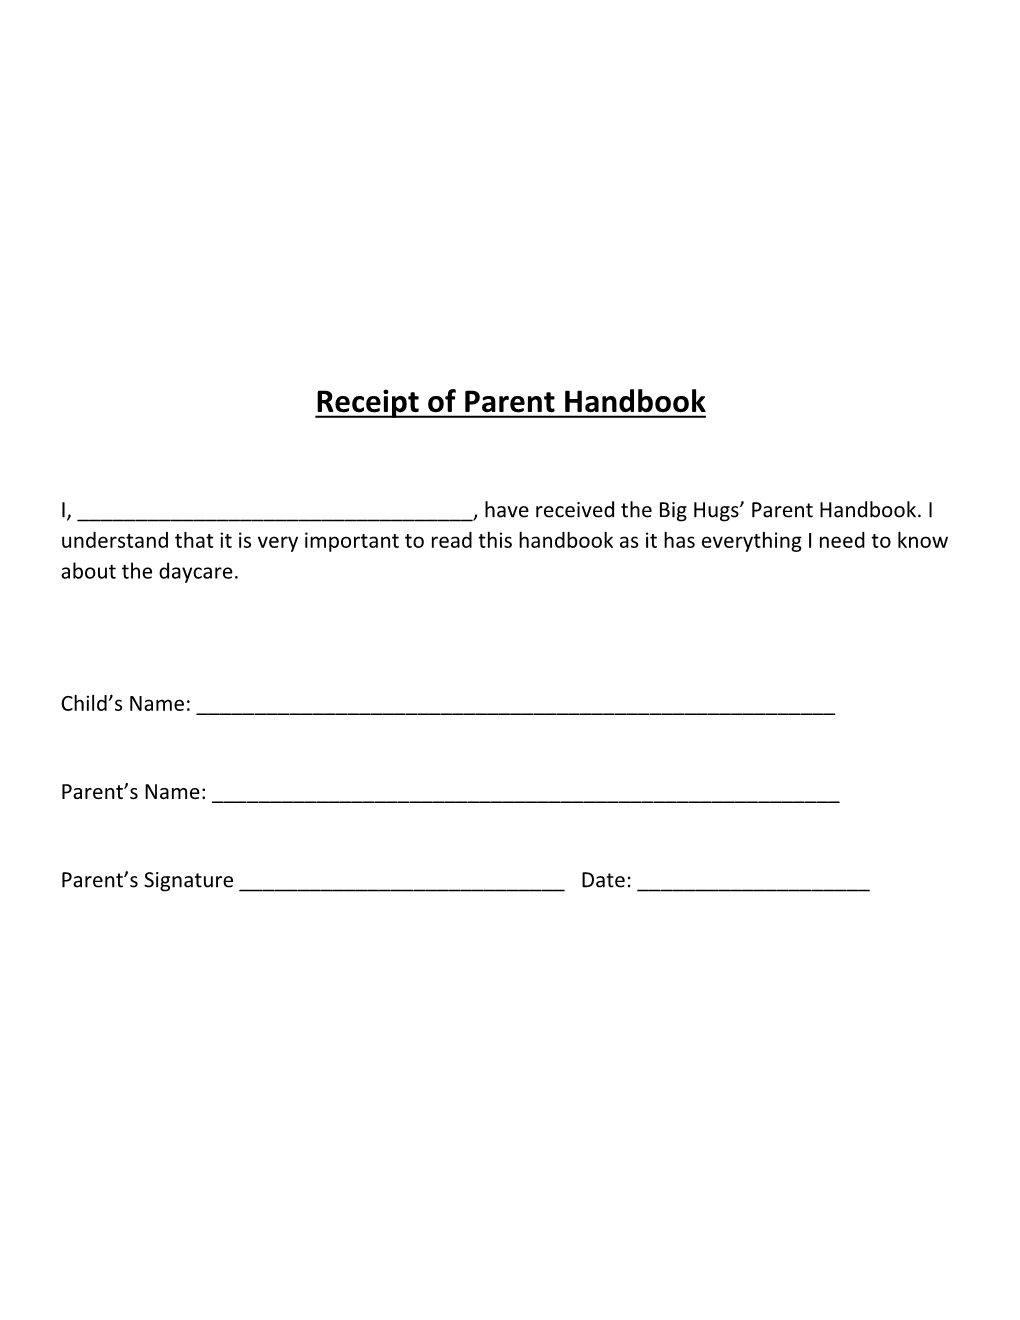 Receipt of Parent Handbook